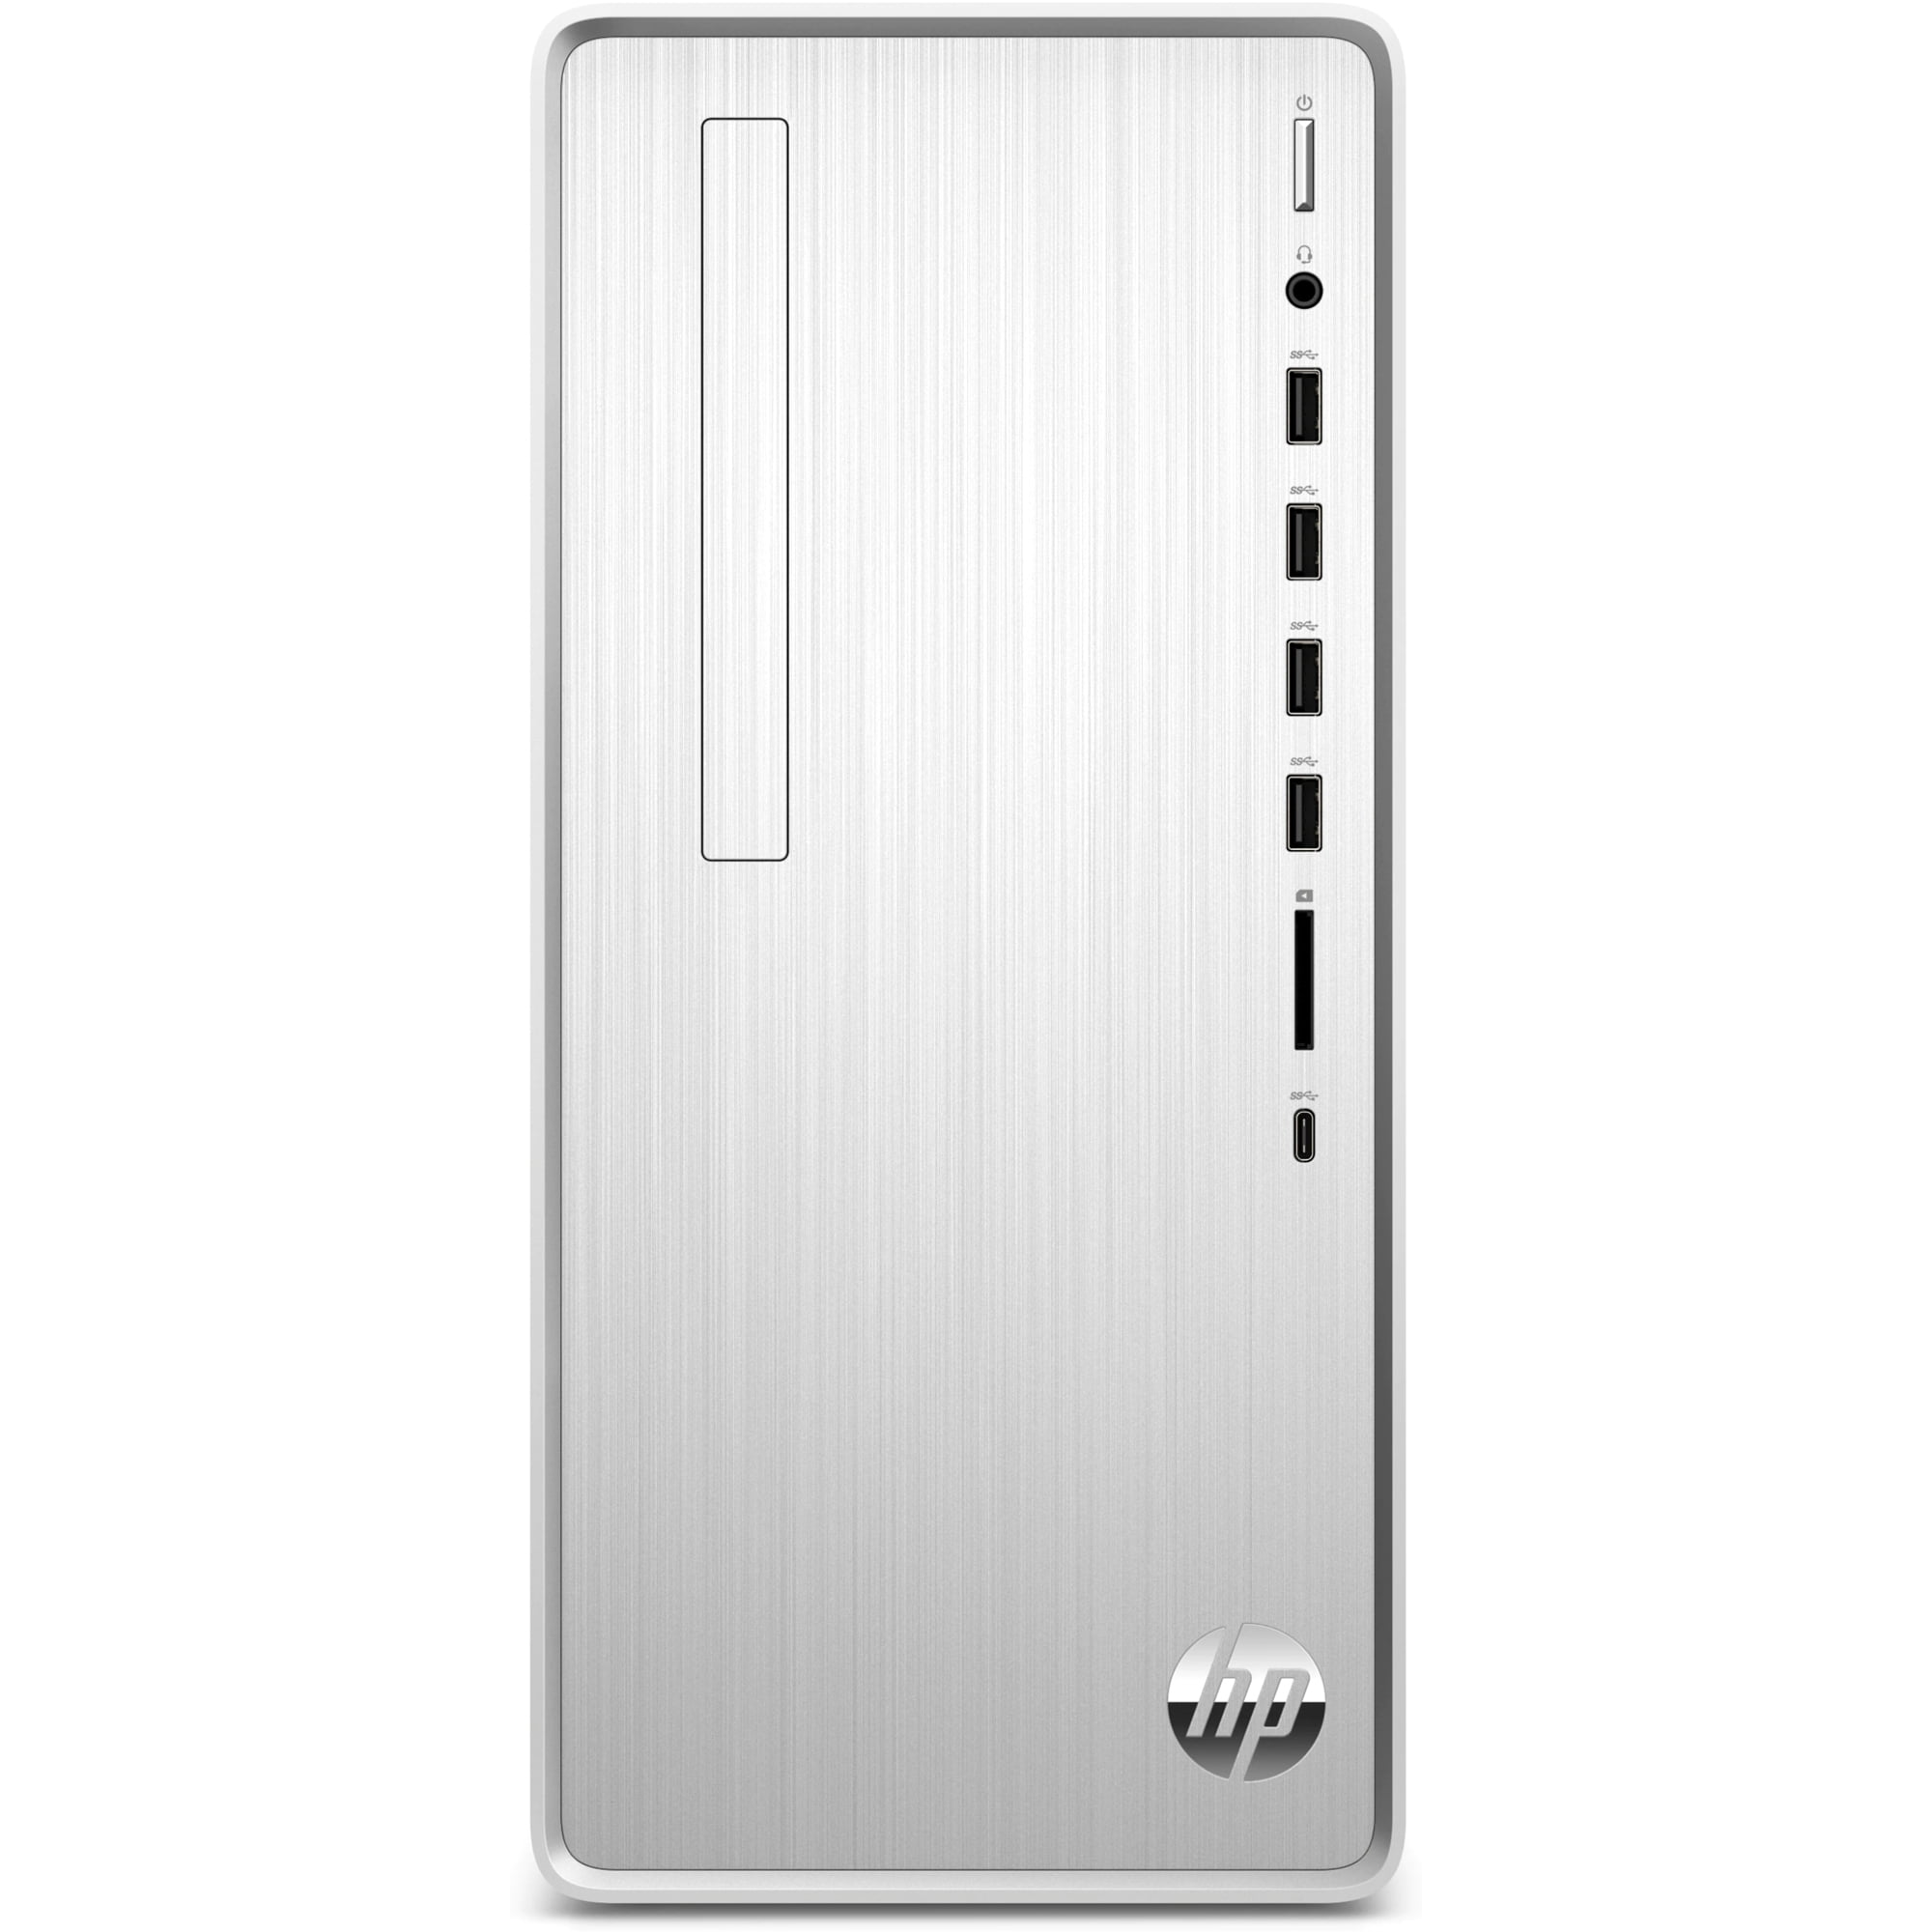 HP Pavilion TP01-3050 Desktop, 12th Gen Core i5, 8GB RAM, 512GB SSD